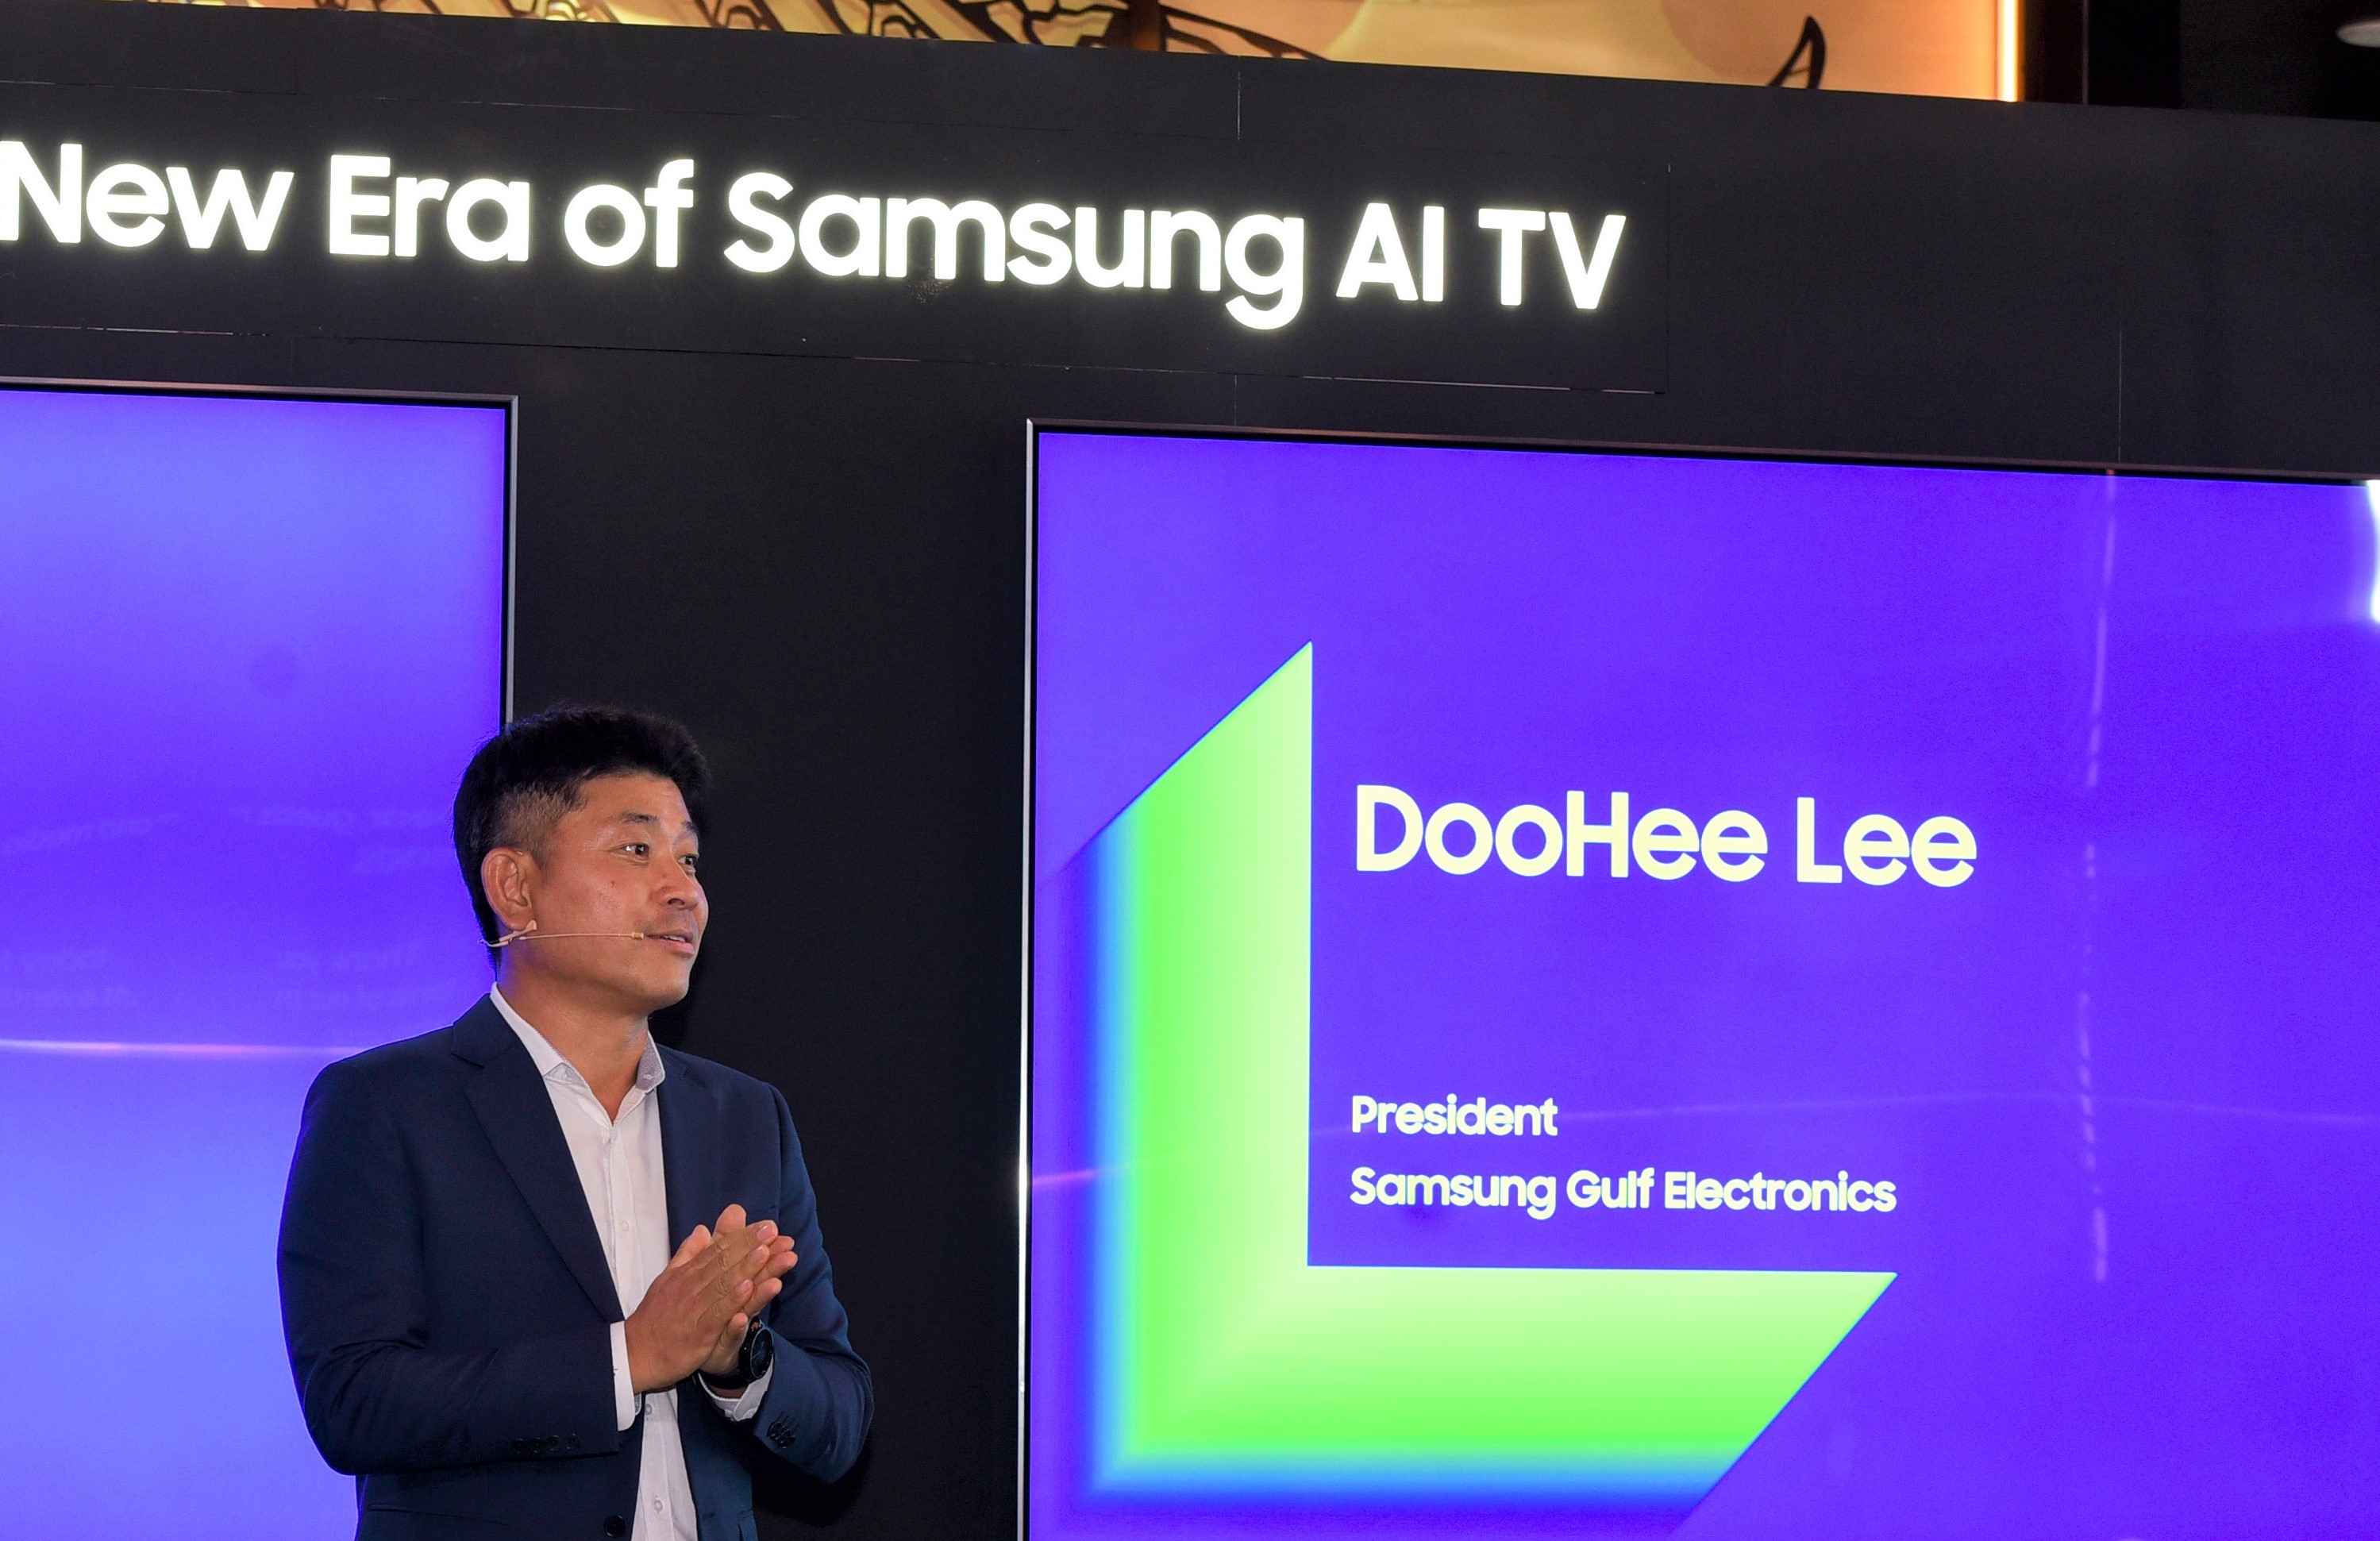 DooHee Lee, President of Samsung Gulf Electronics